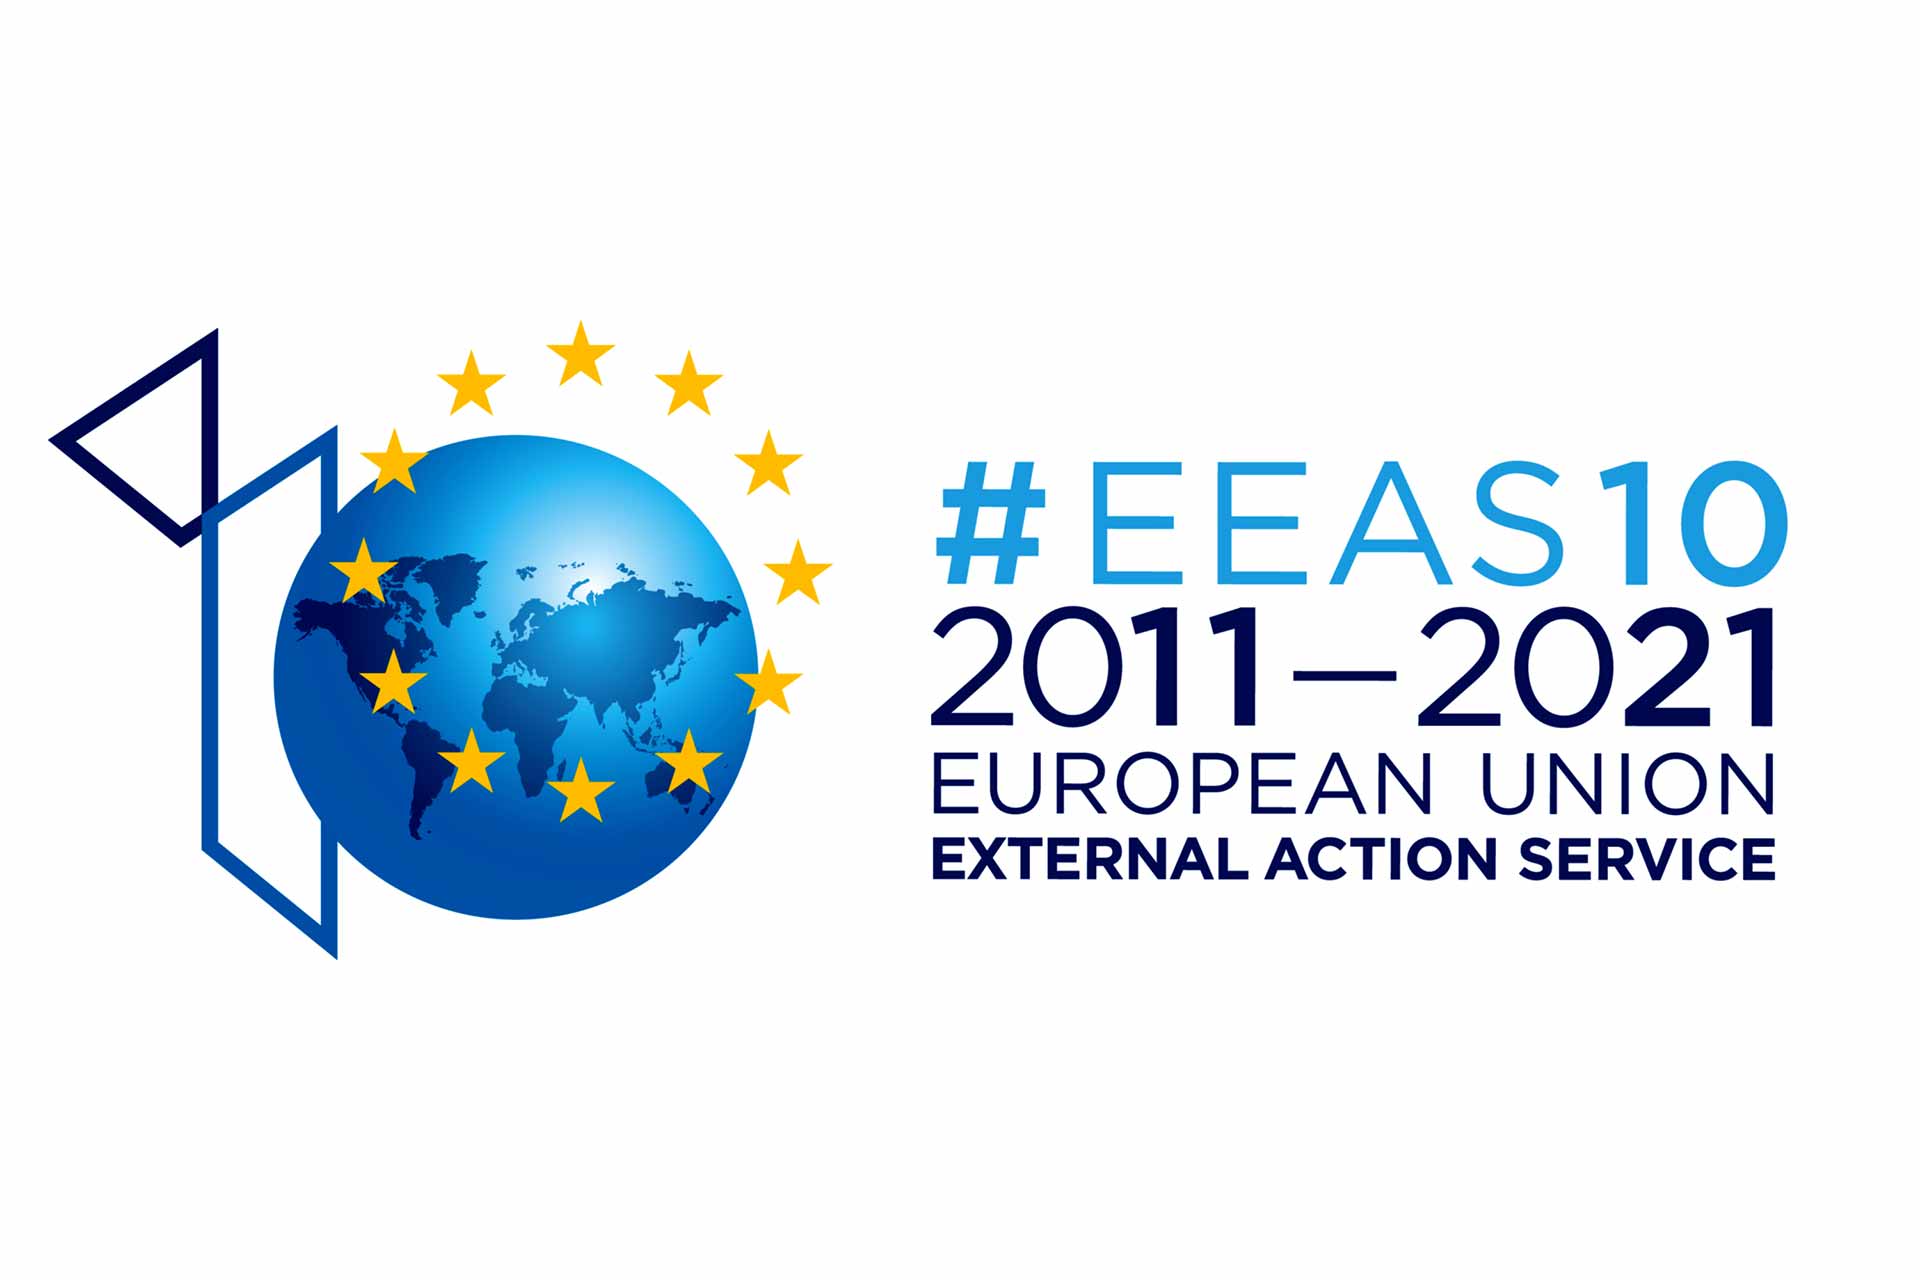 European Union External Action Service #EEAS10 events